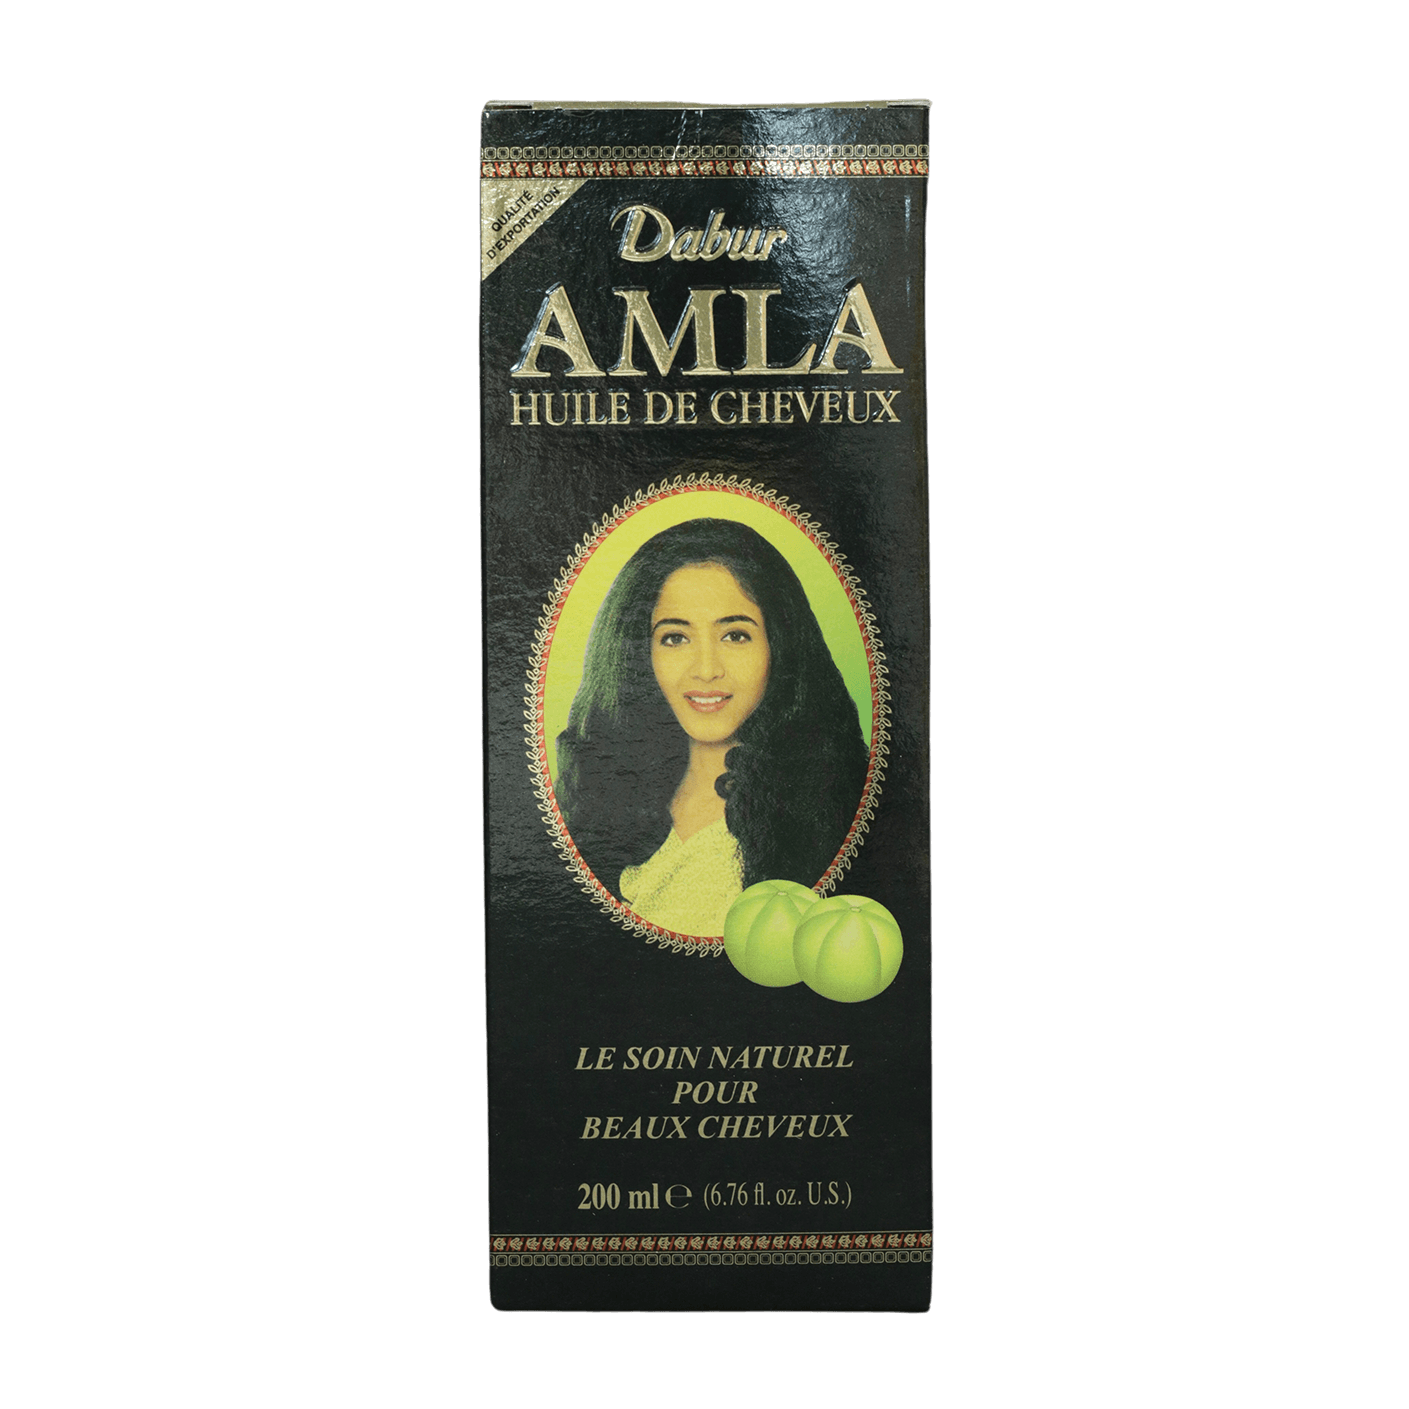  Dabur Amla Jasmine Hair Oil - Amla Oil, Amla Hair Oil